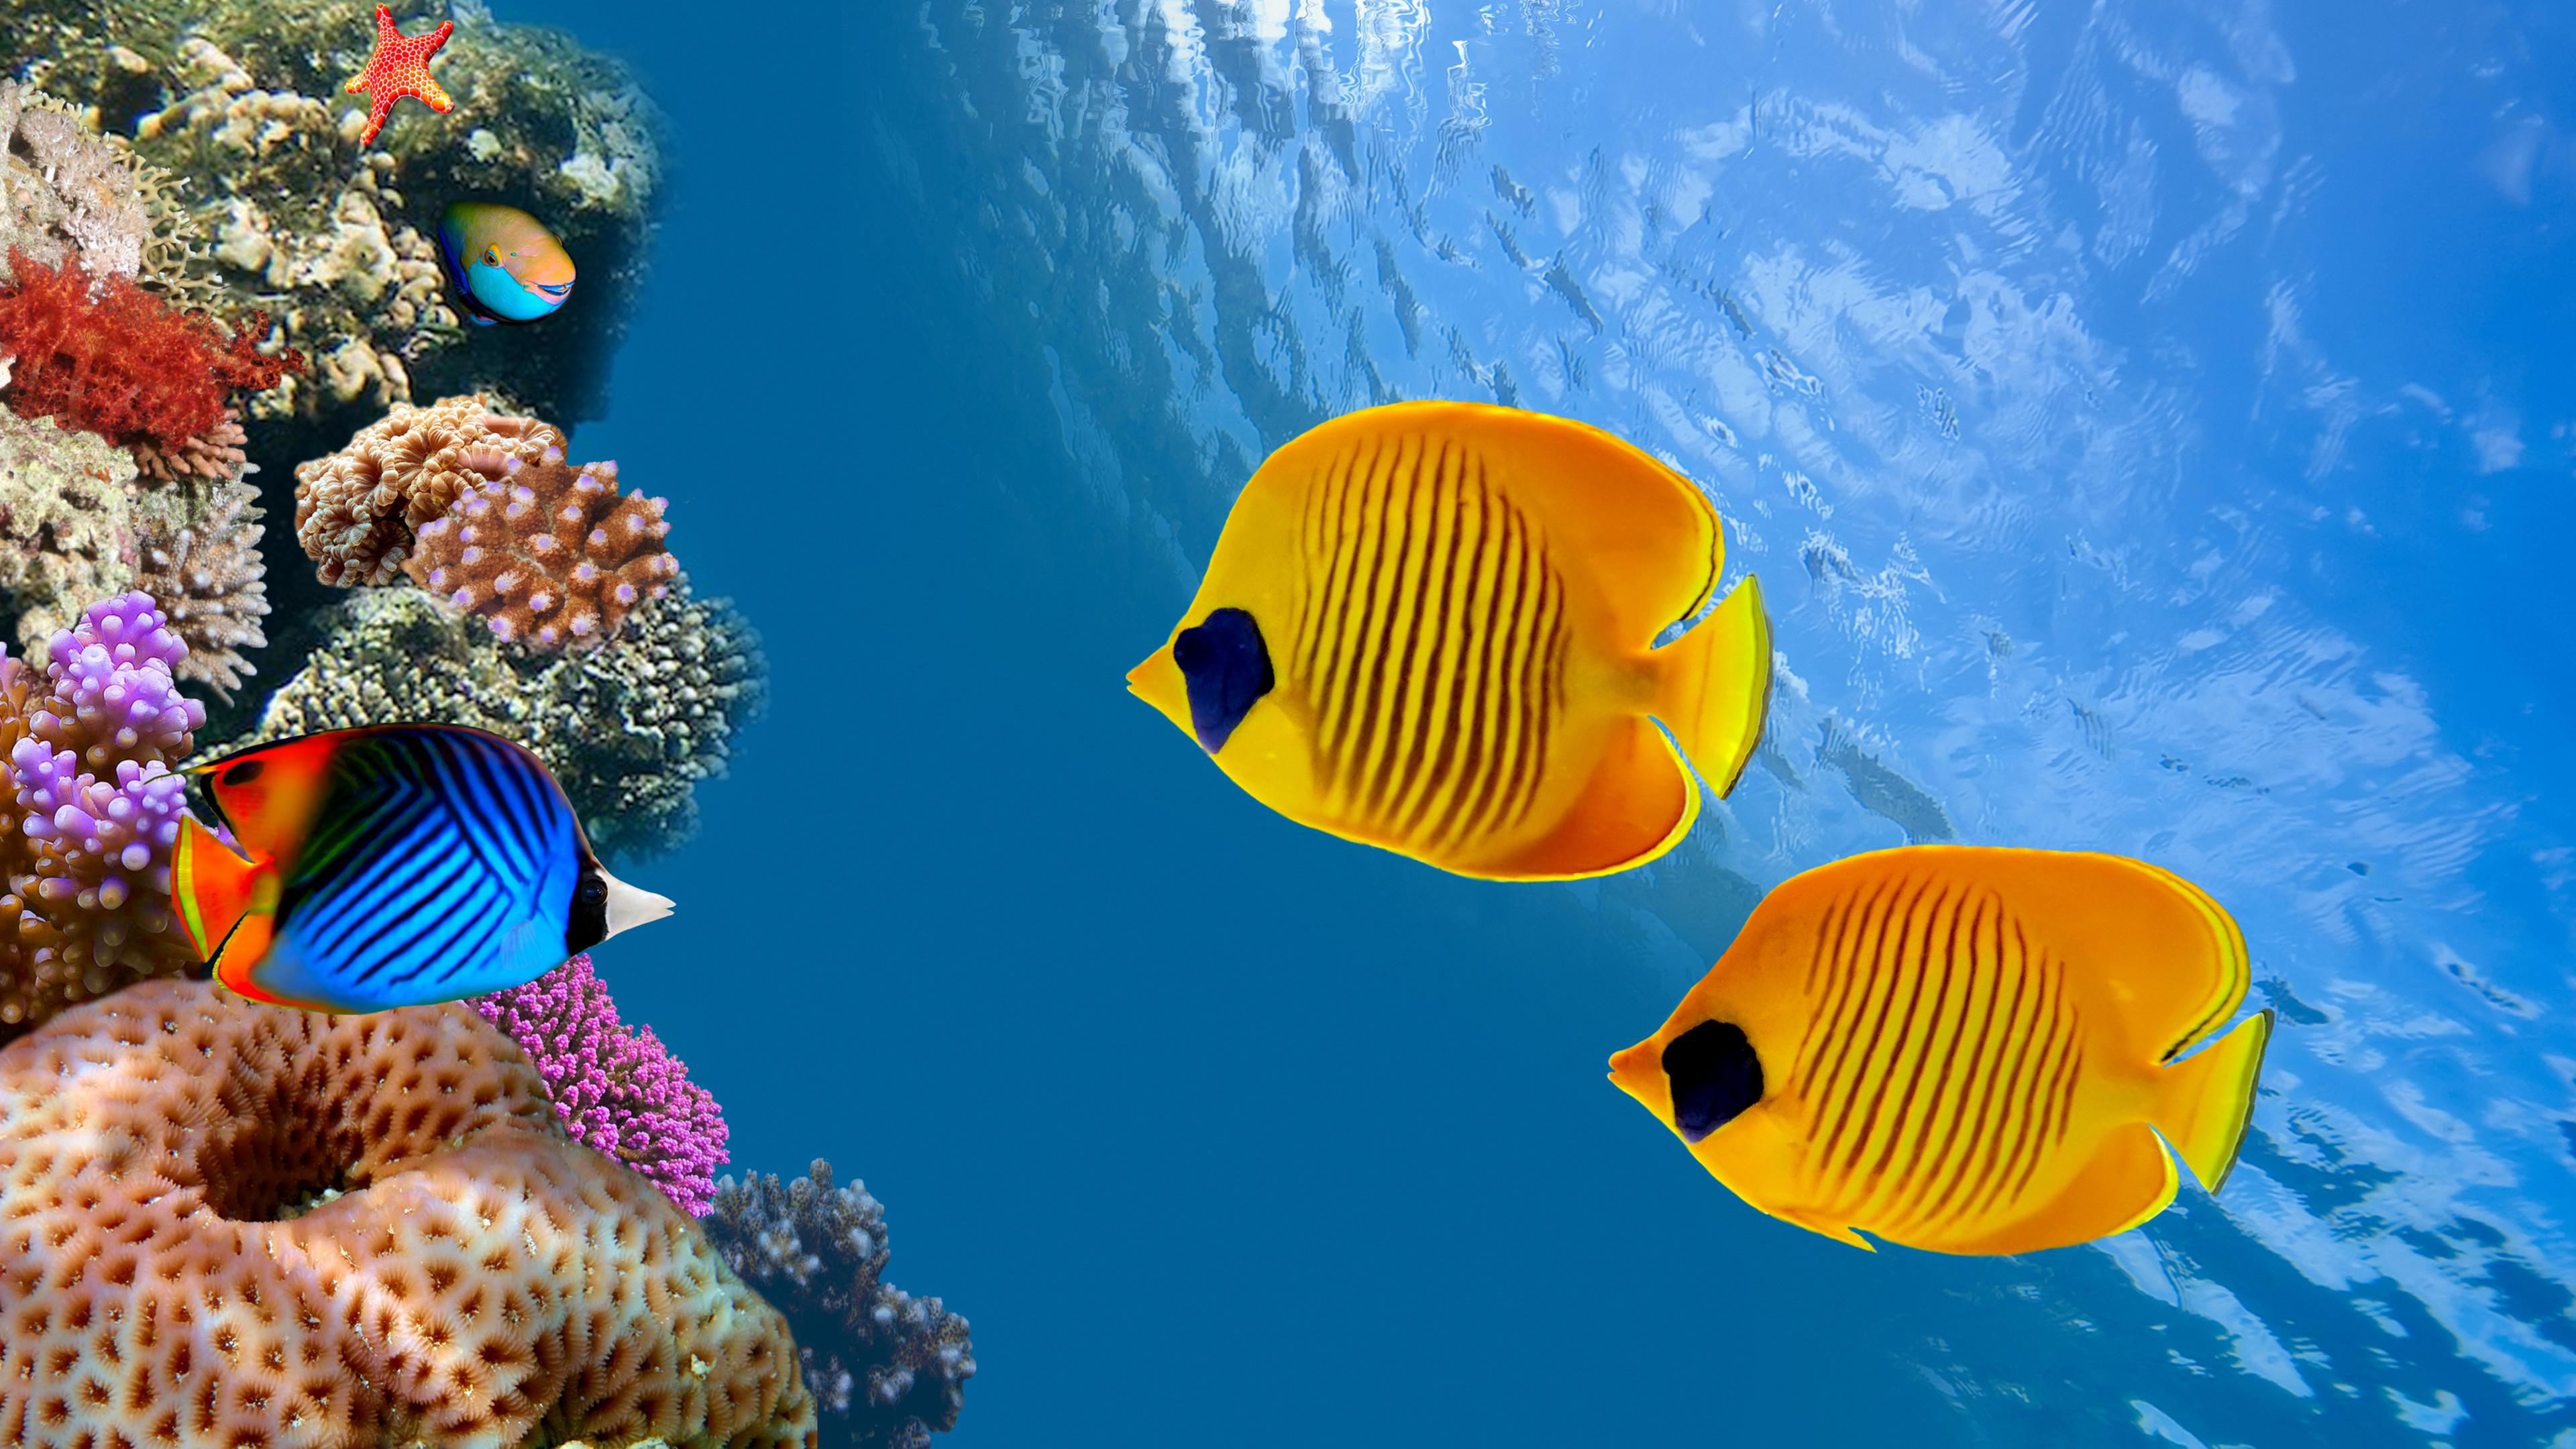 Wallpaper Fish, 5k, 4k wallpaper, 8k, diving, tourism, Cocos Island